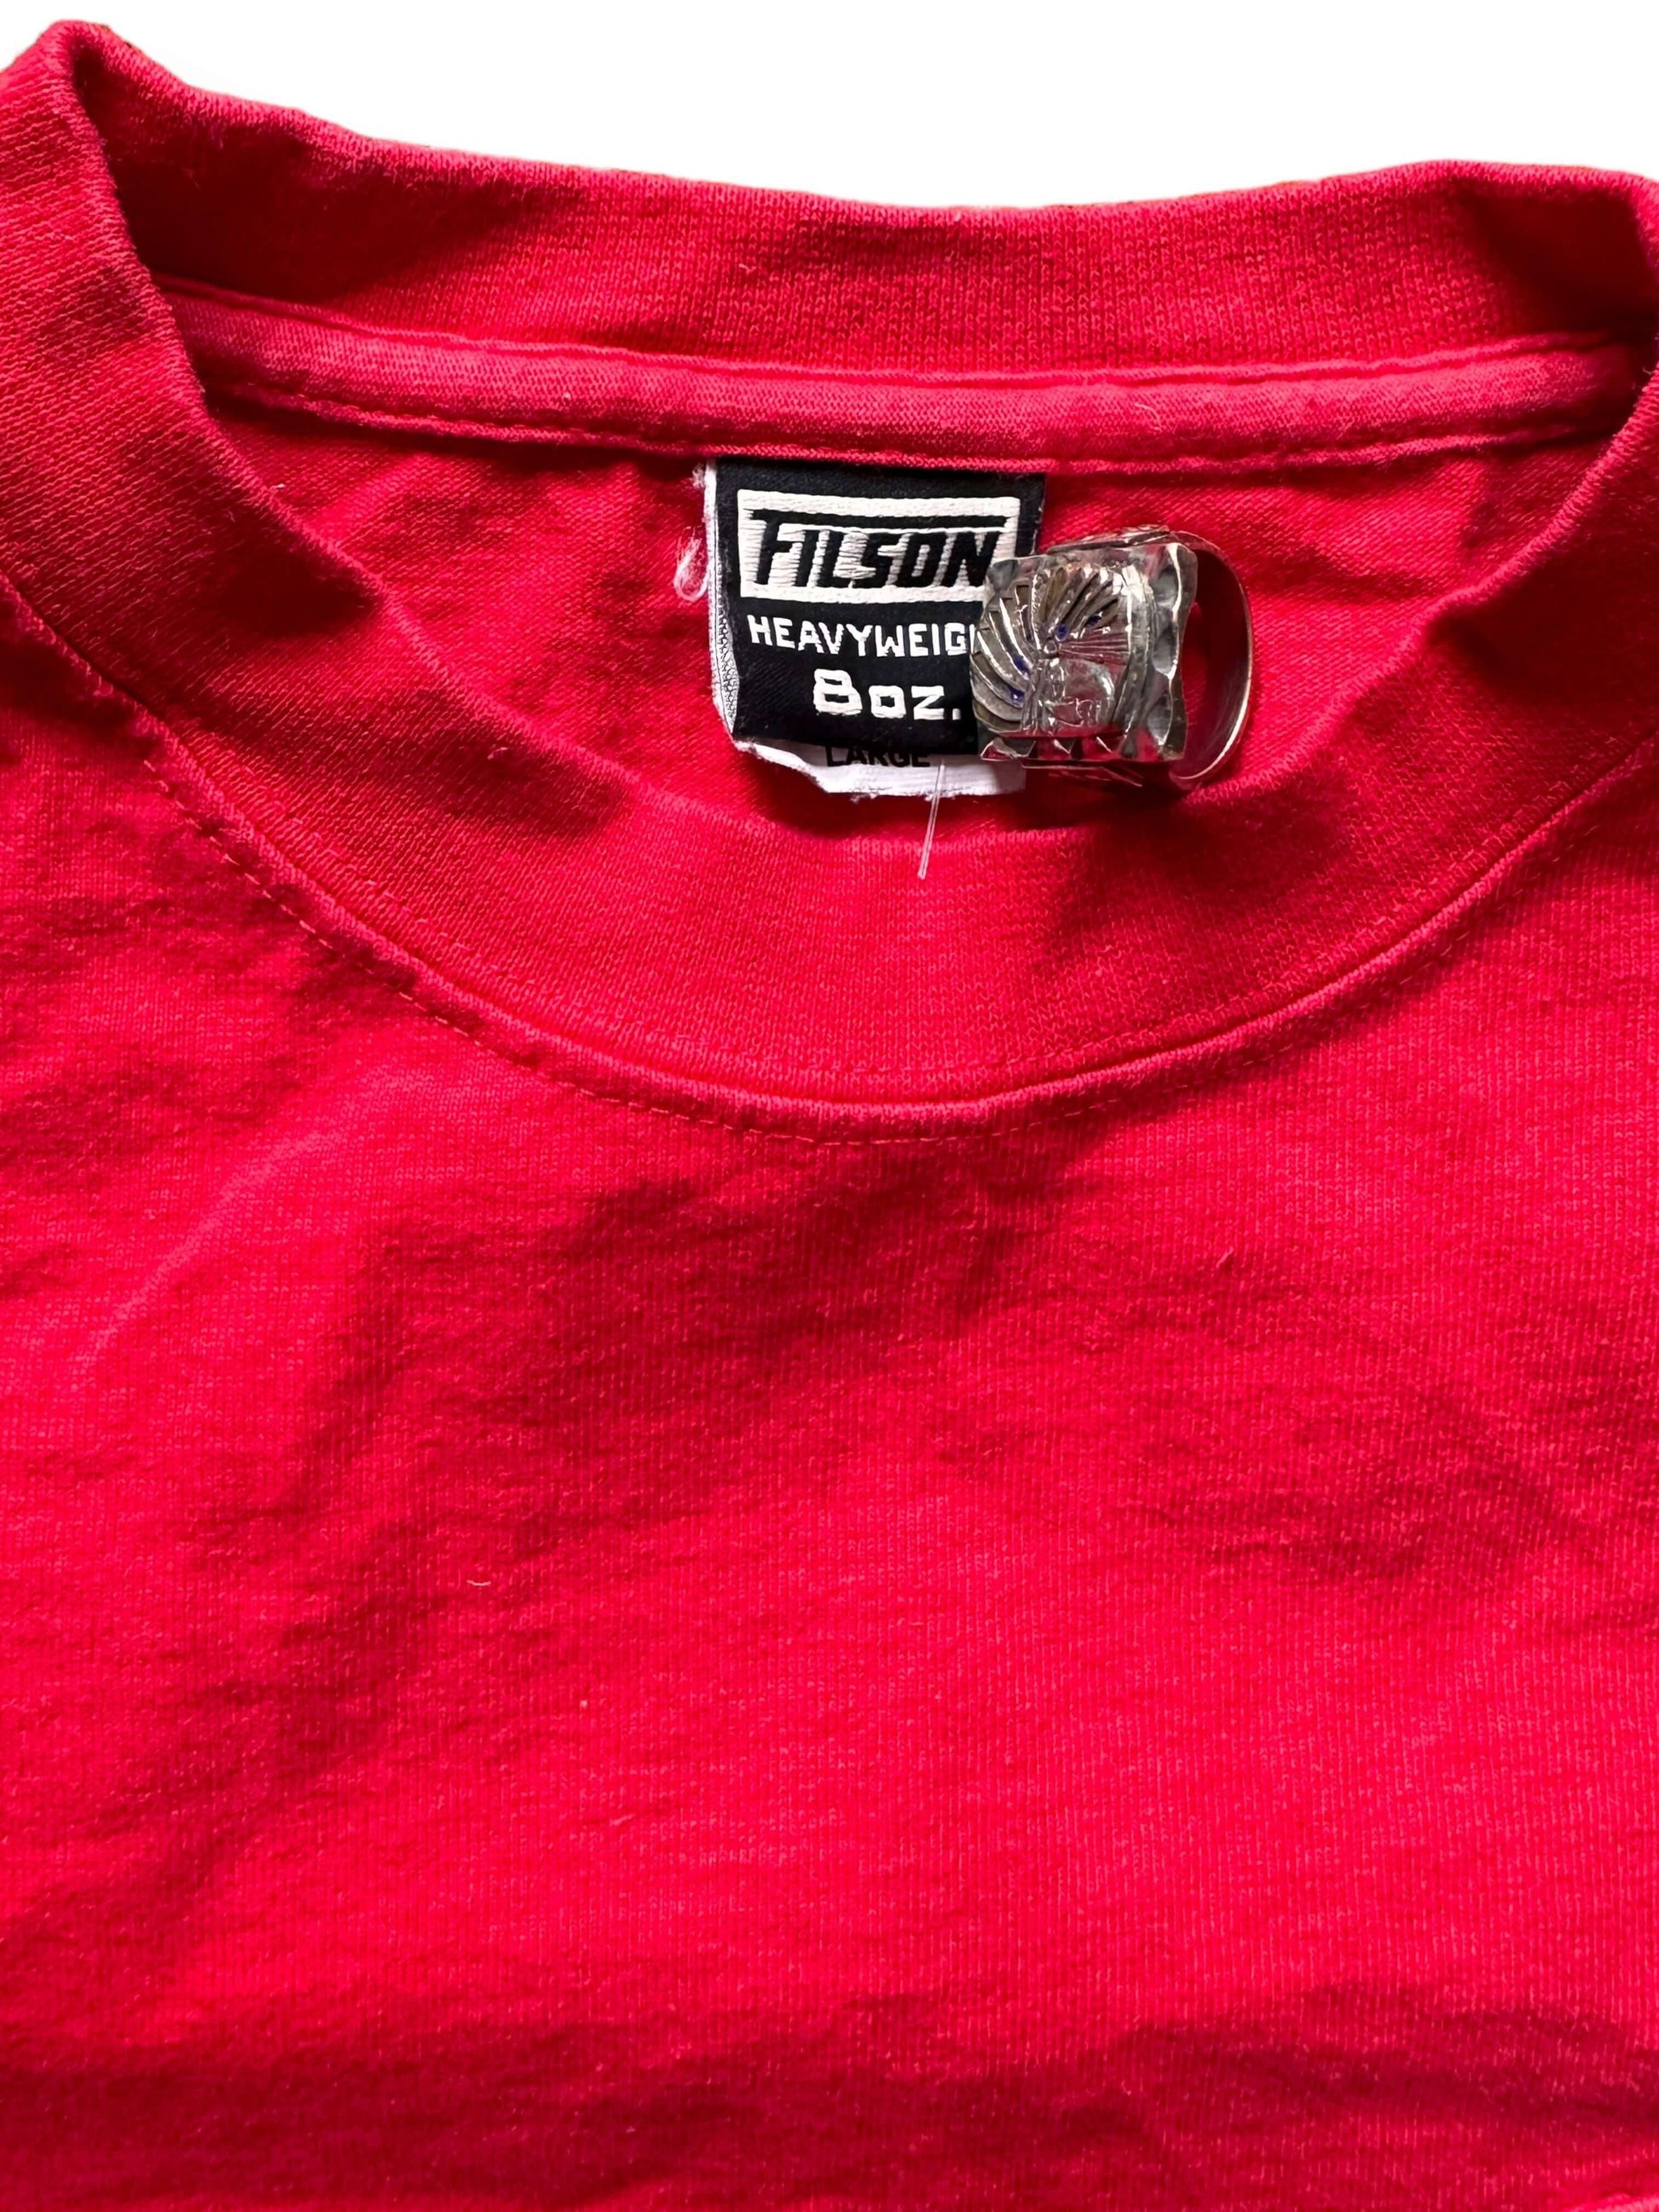 Tag View of Red Filson Loopwheel Heavyweight Cotton Pocket Tee SZ L |  Barn Owl Vintage Goods | Vintage Filson Workwear Seattle